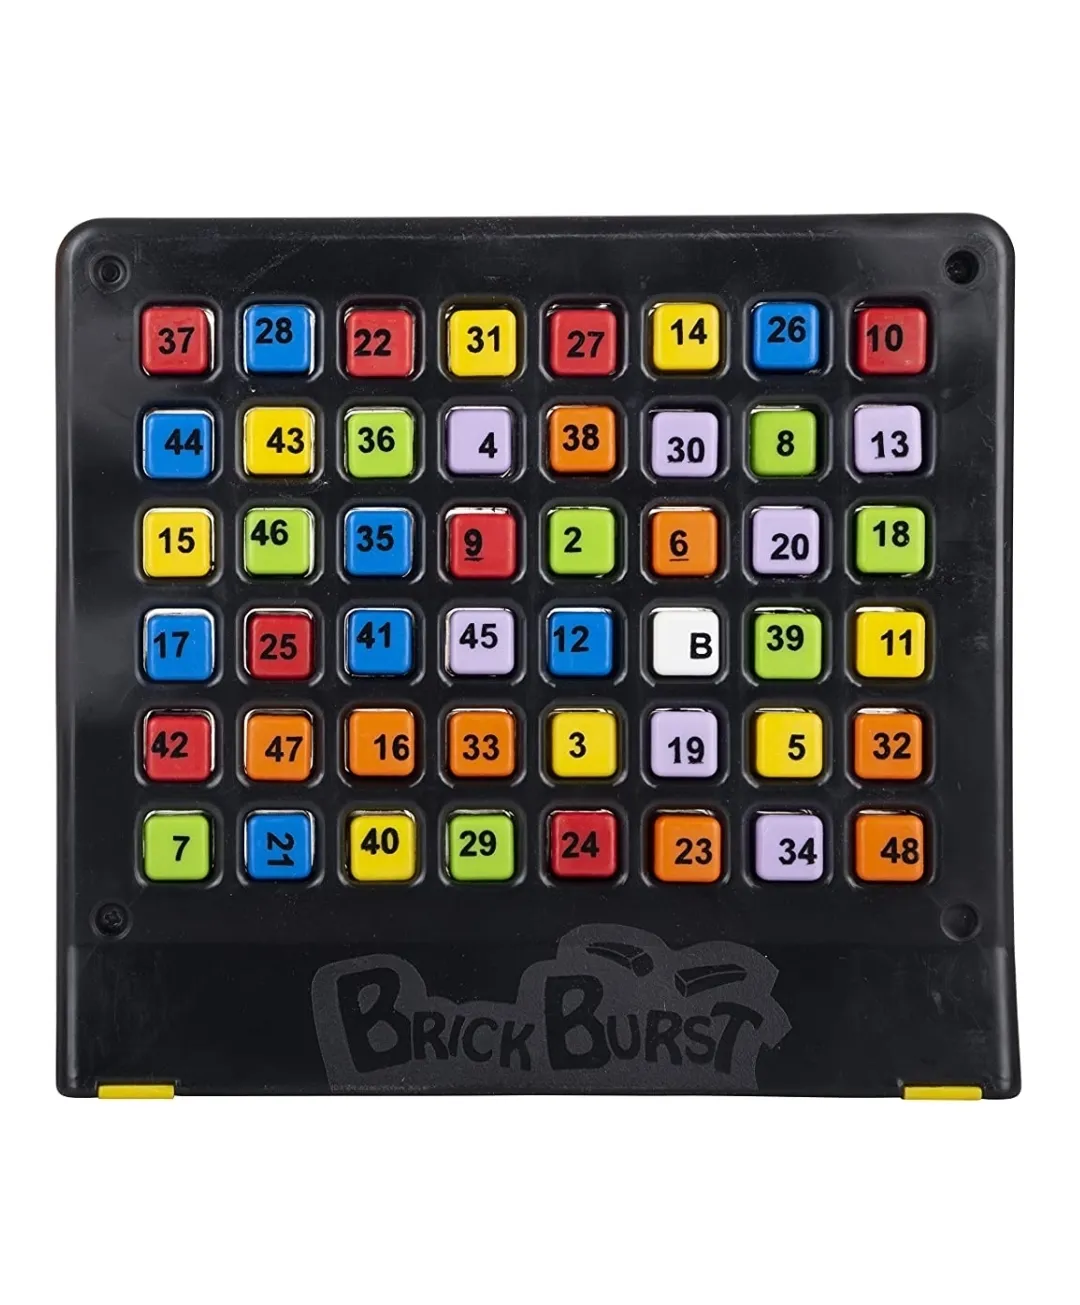 Funskool Brick Burst Game Multi Colour